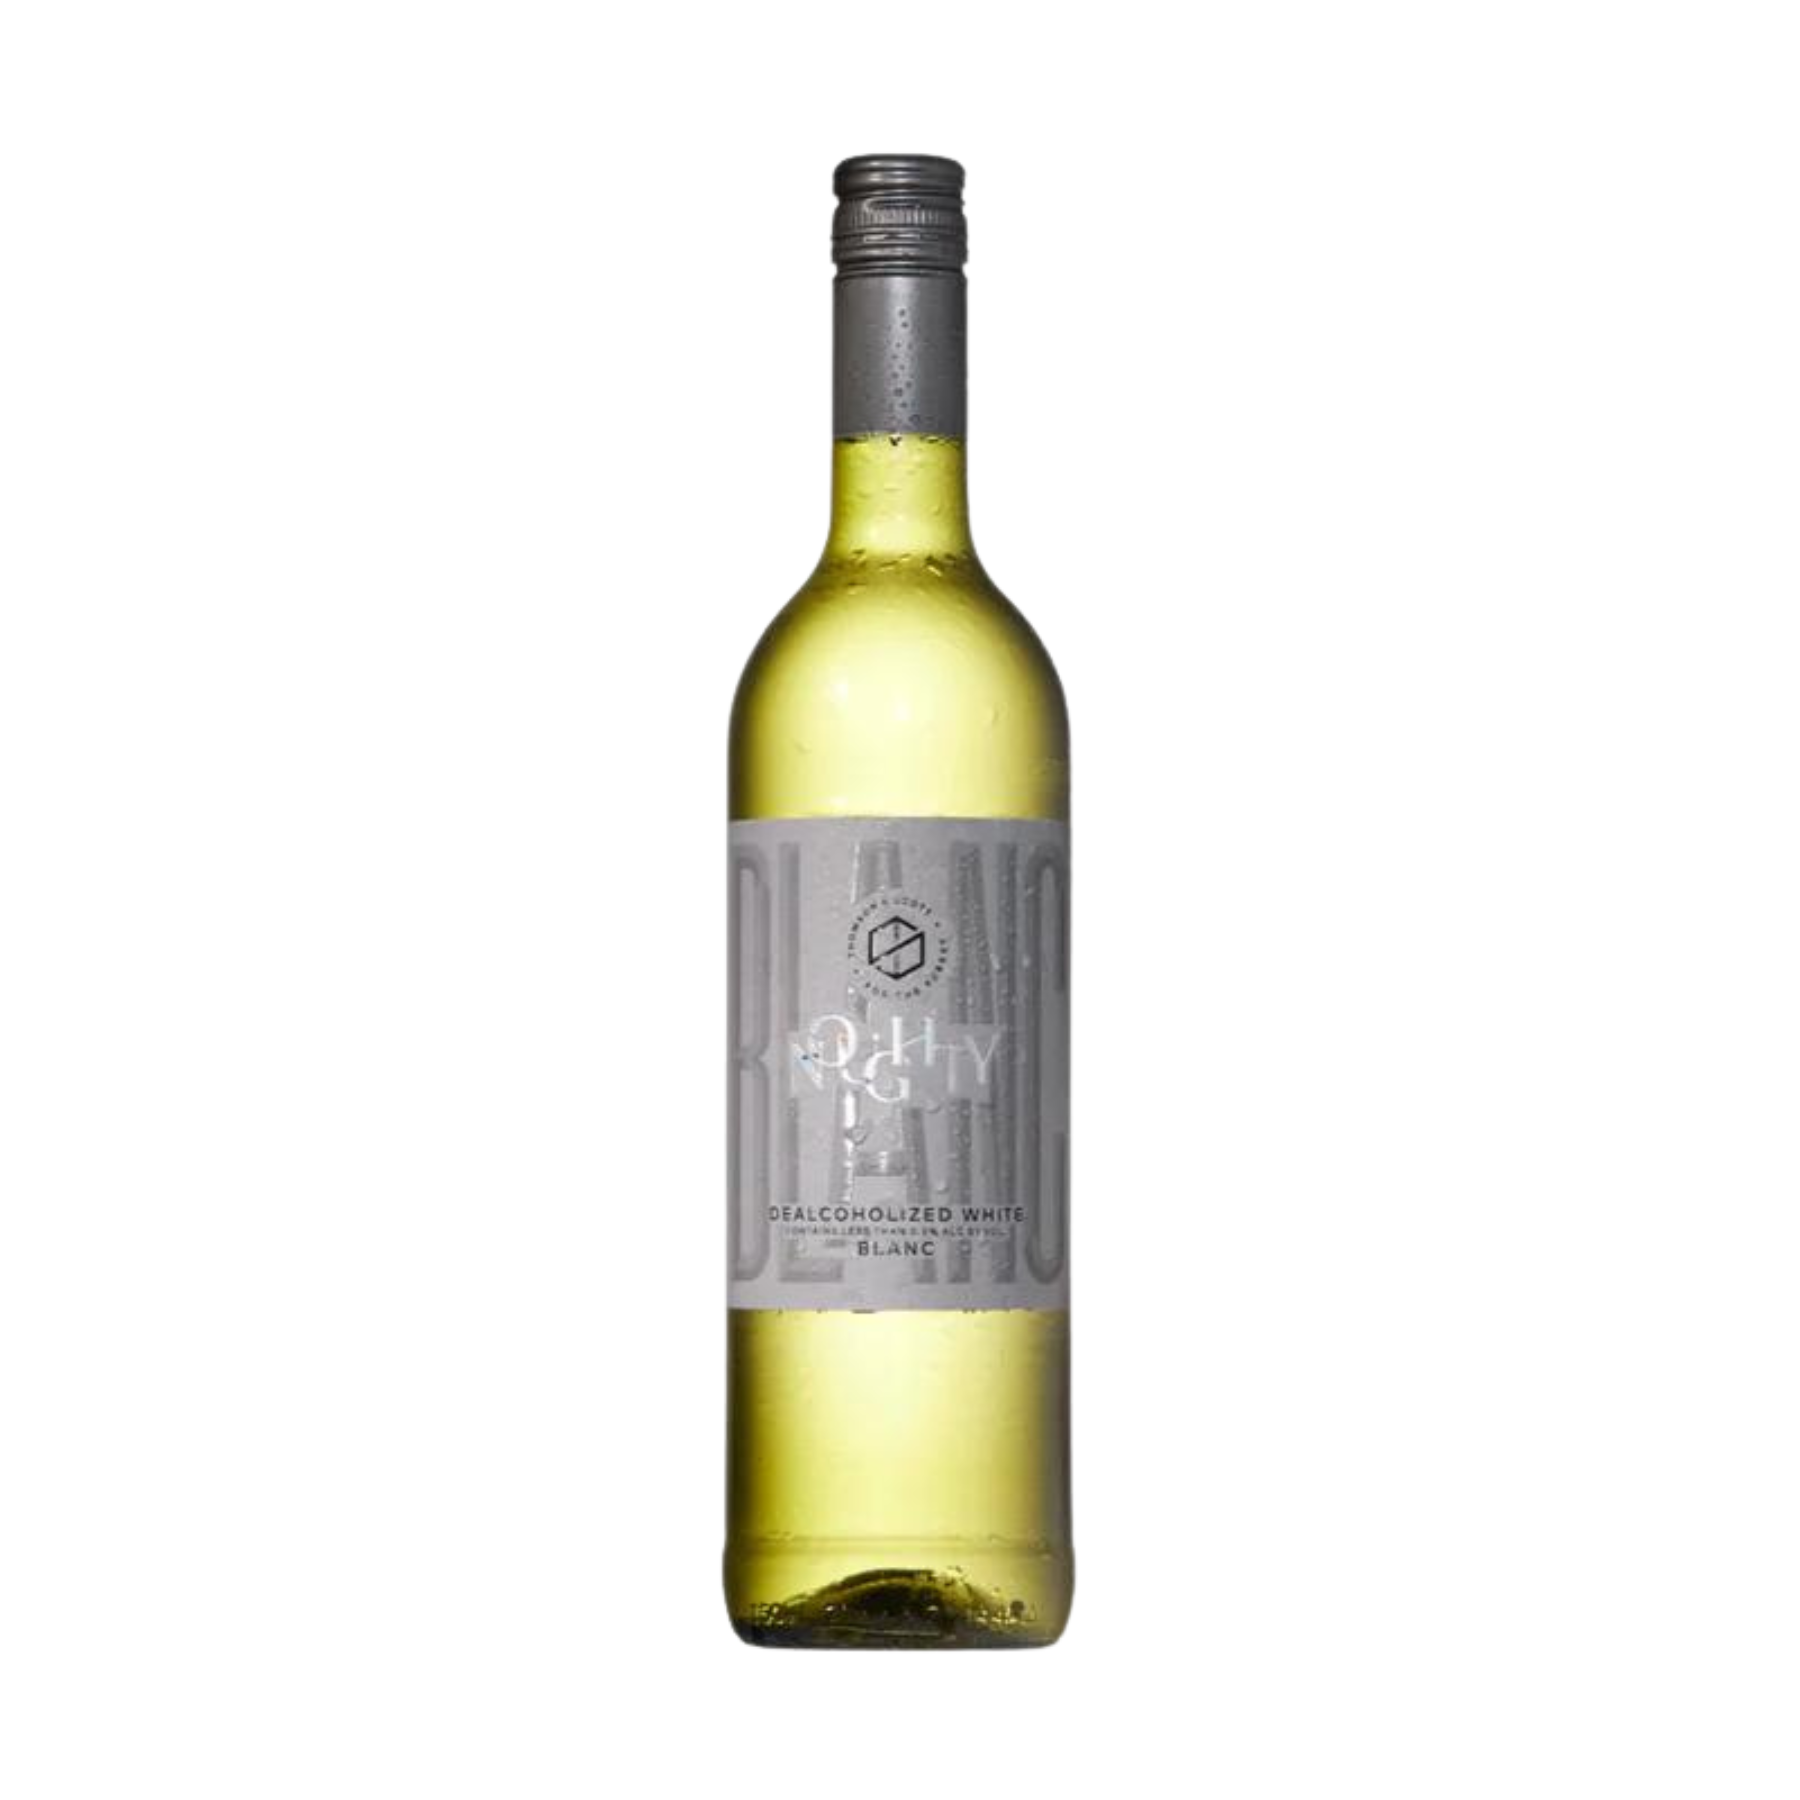 Noughty Blanc | Dealcoholized White Wine